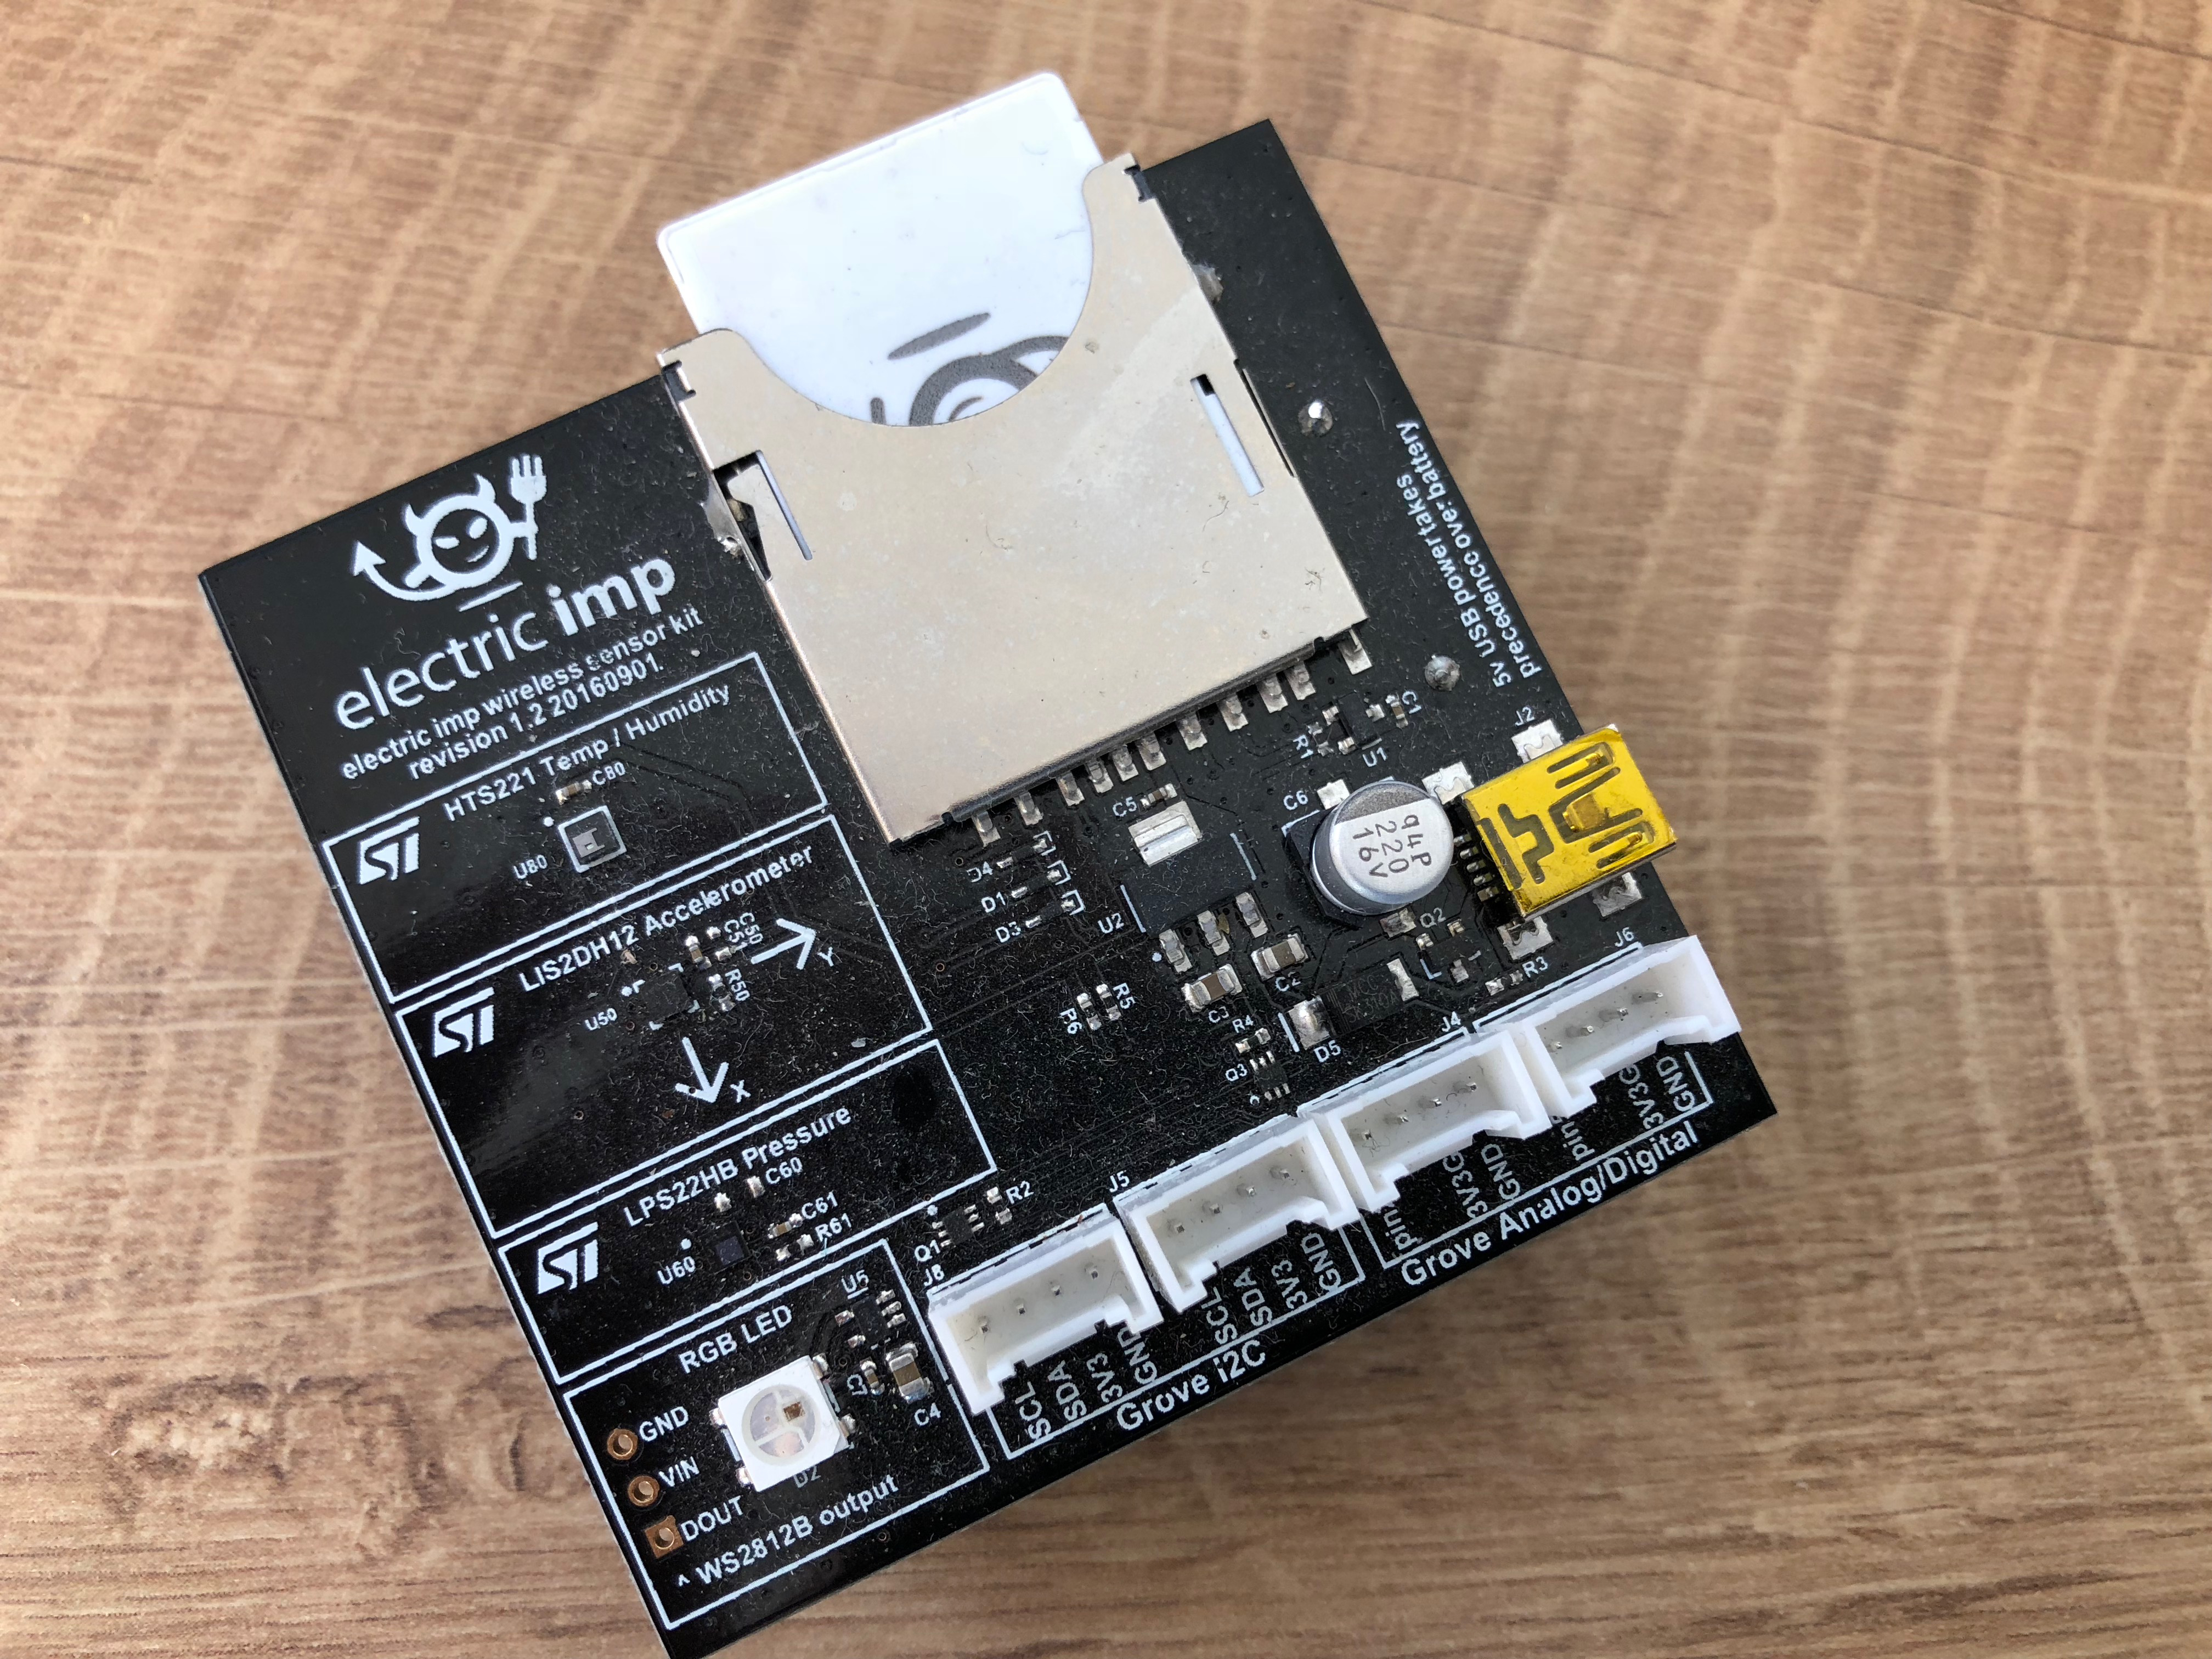 Electric Imp impExplorer IoT development kit